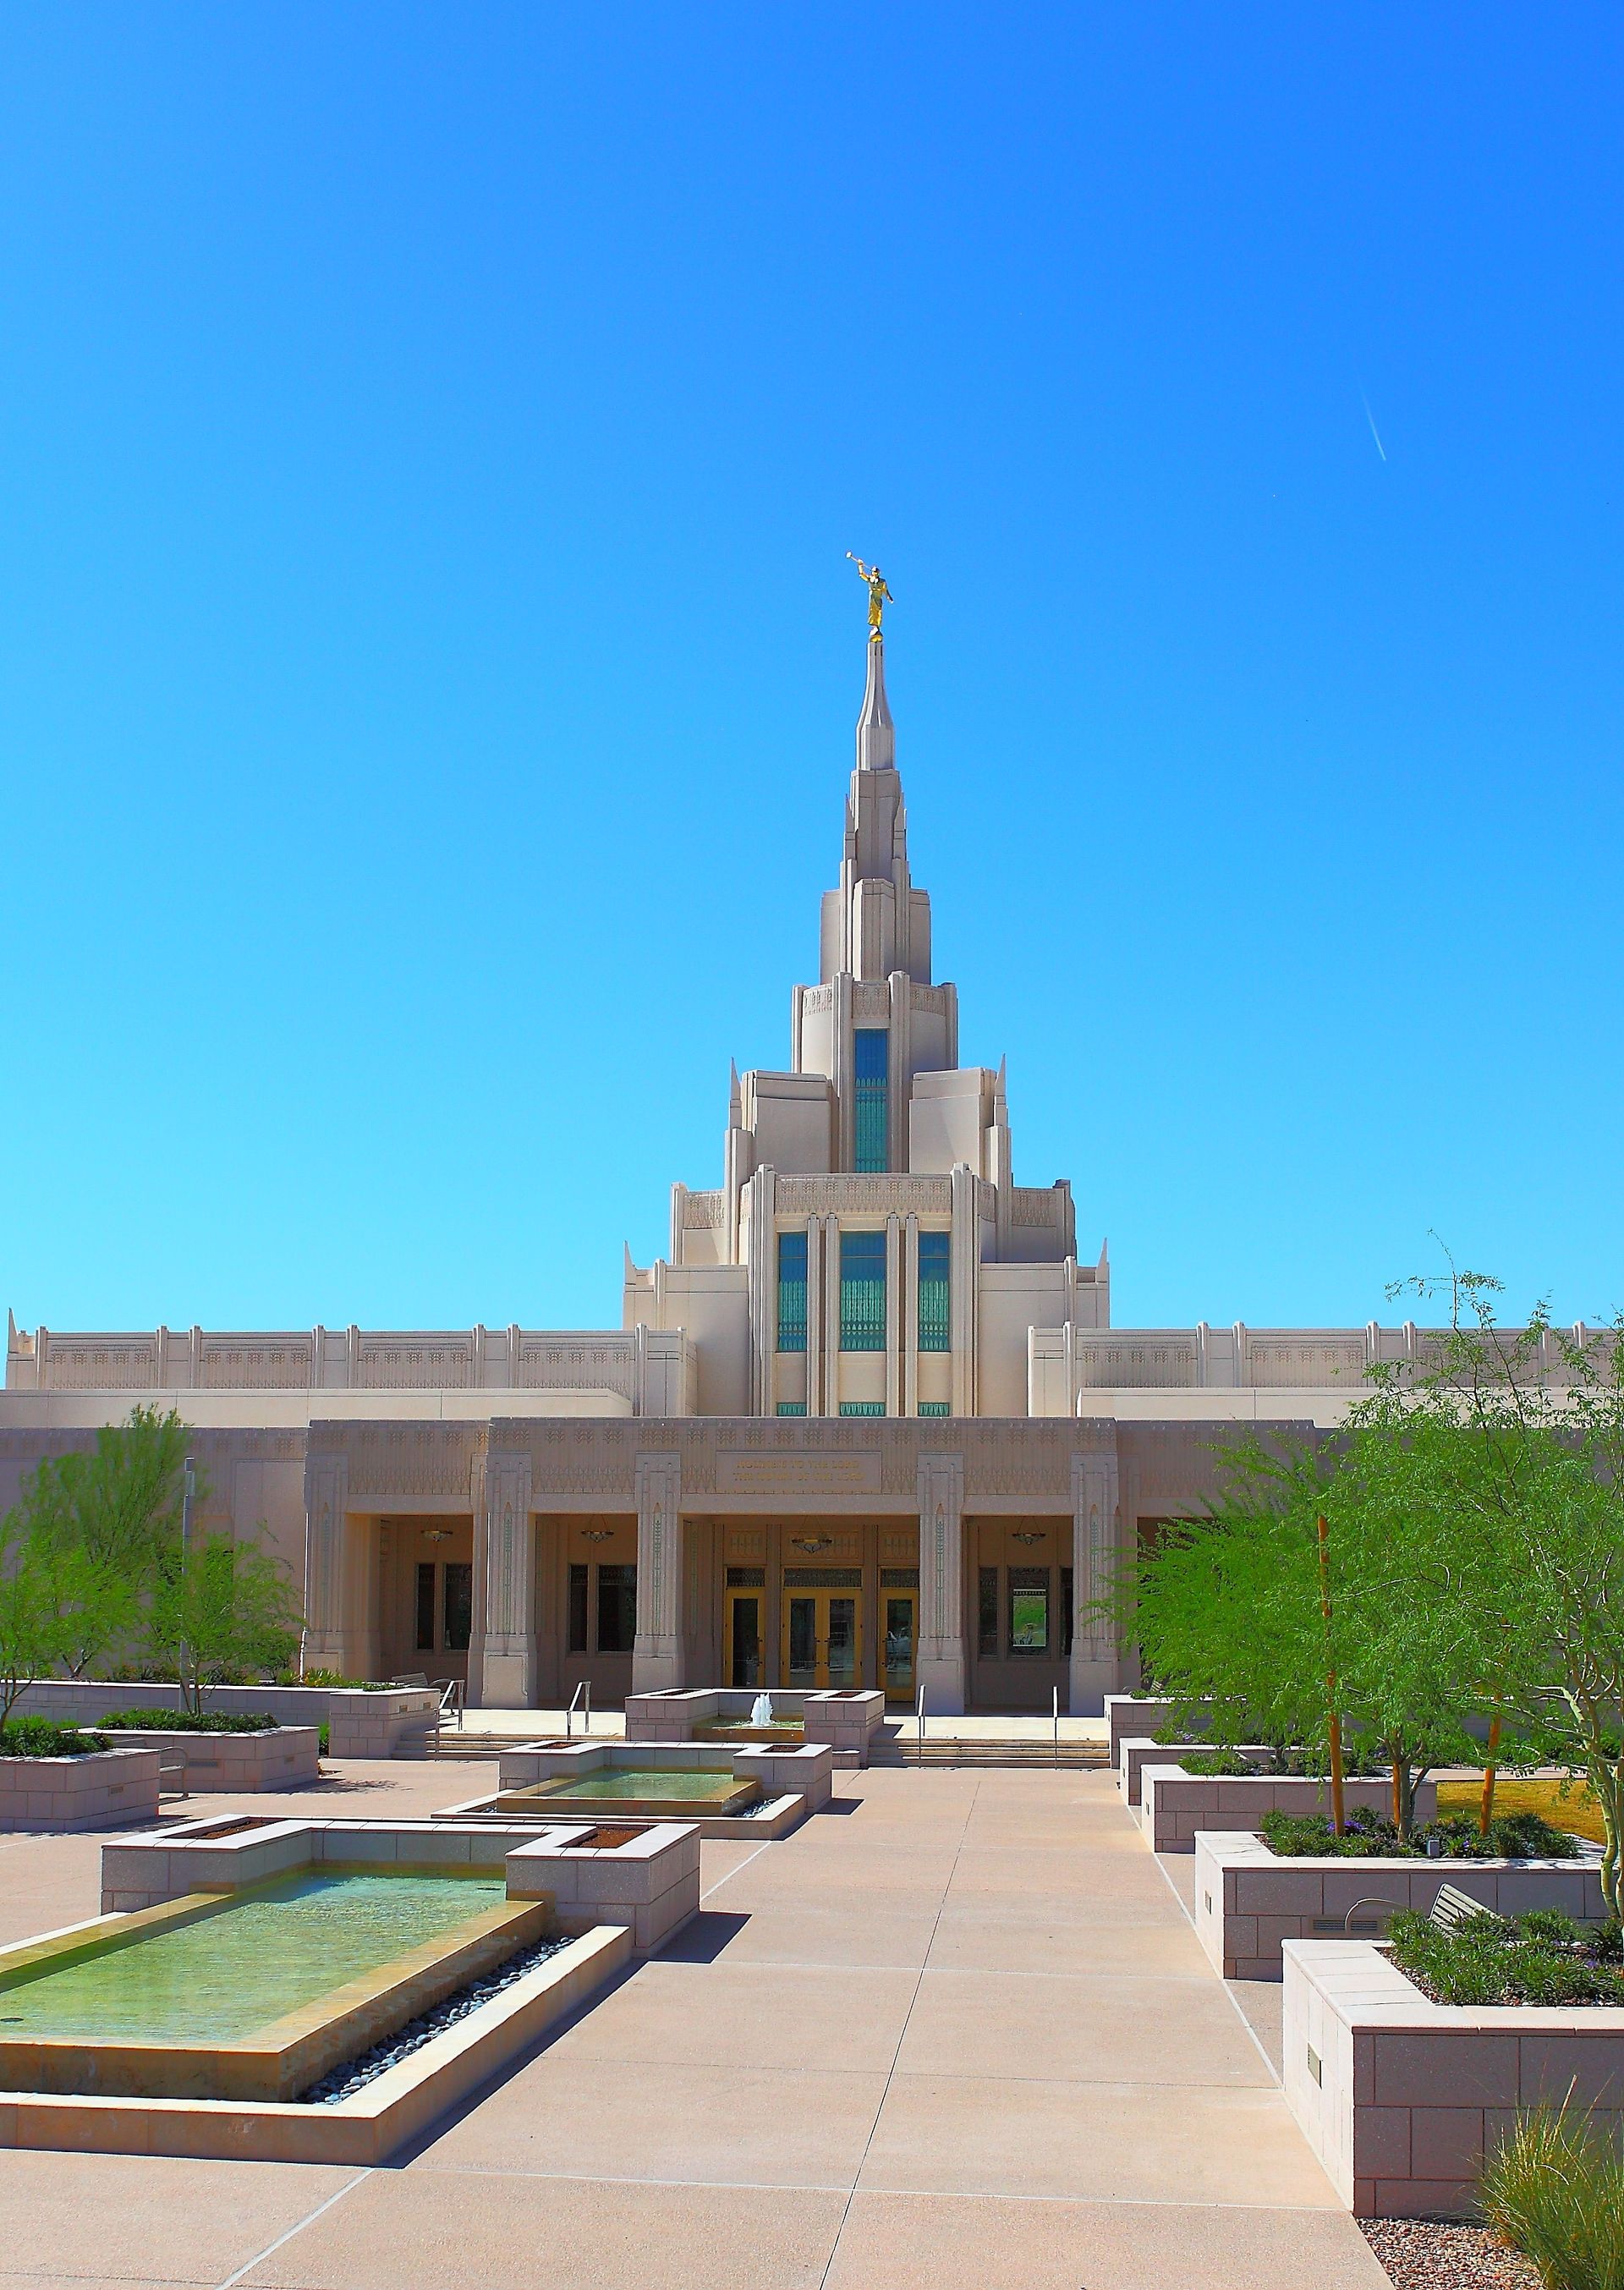 A view of the Phoenix Arizona Temple entrance.